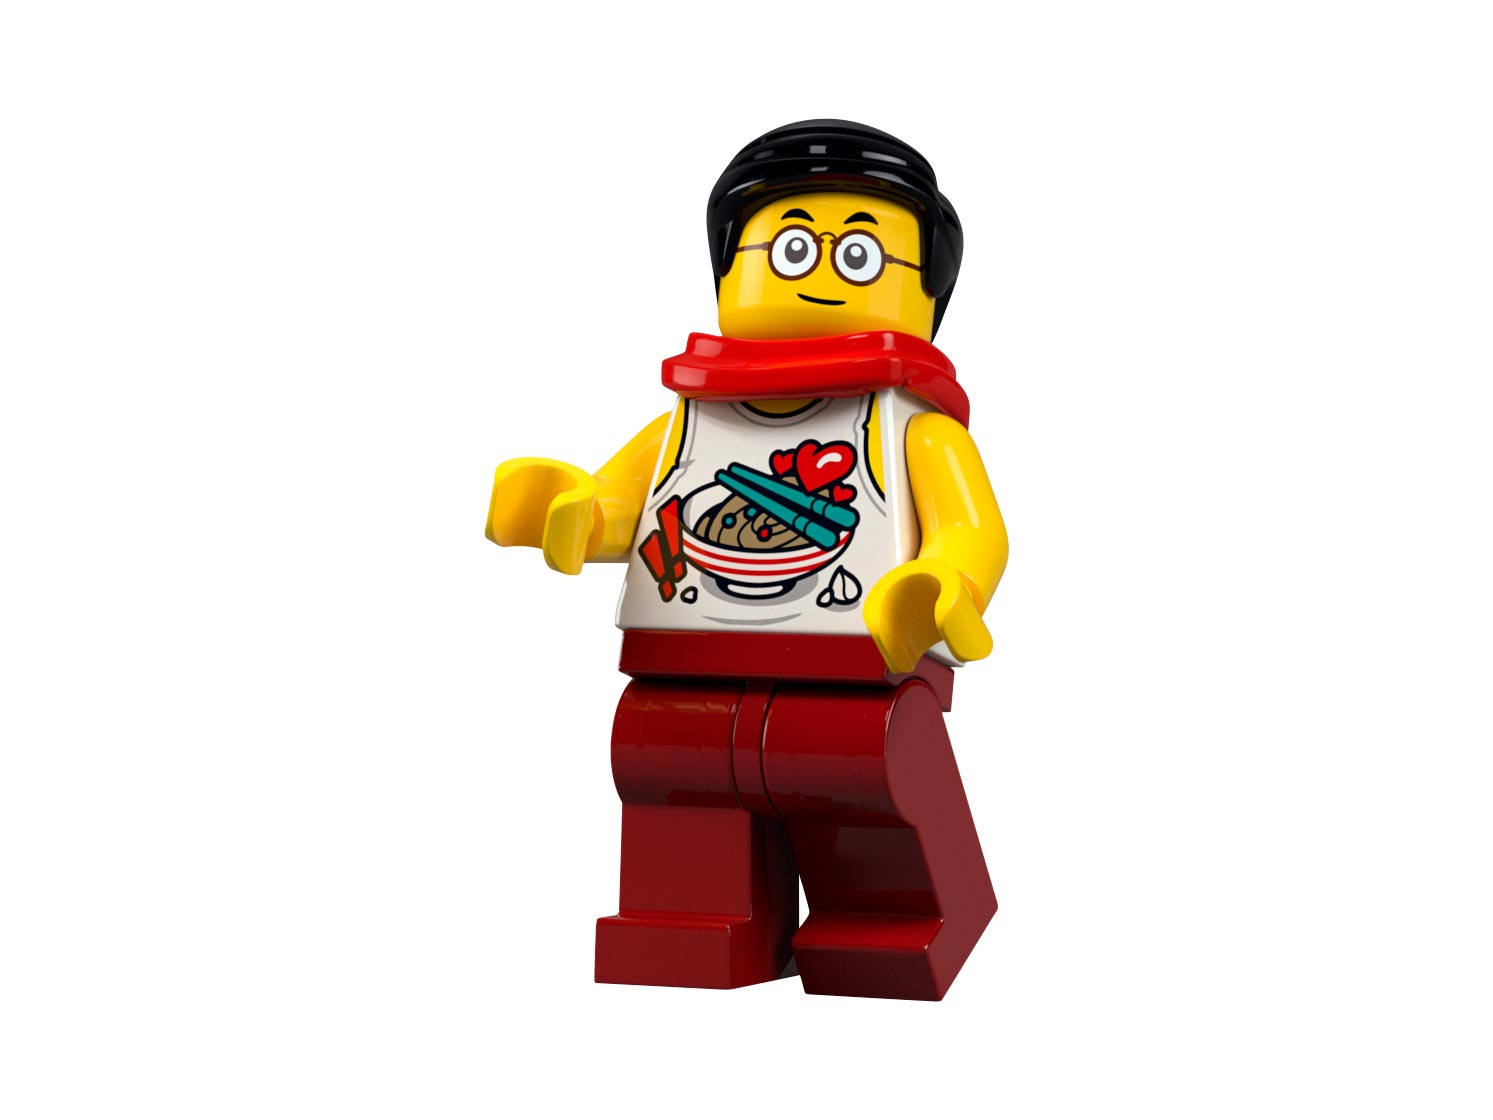 Конструктор LEGO Monkie Kid 80026 Конструктор Танк-лапша Пигси